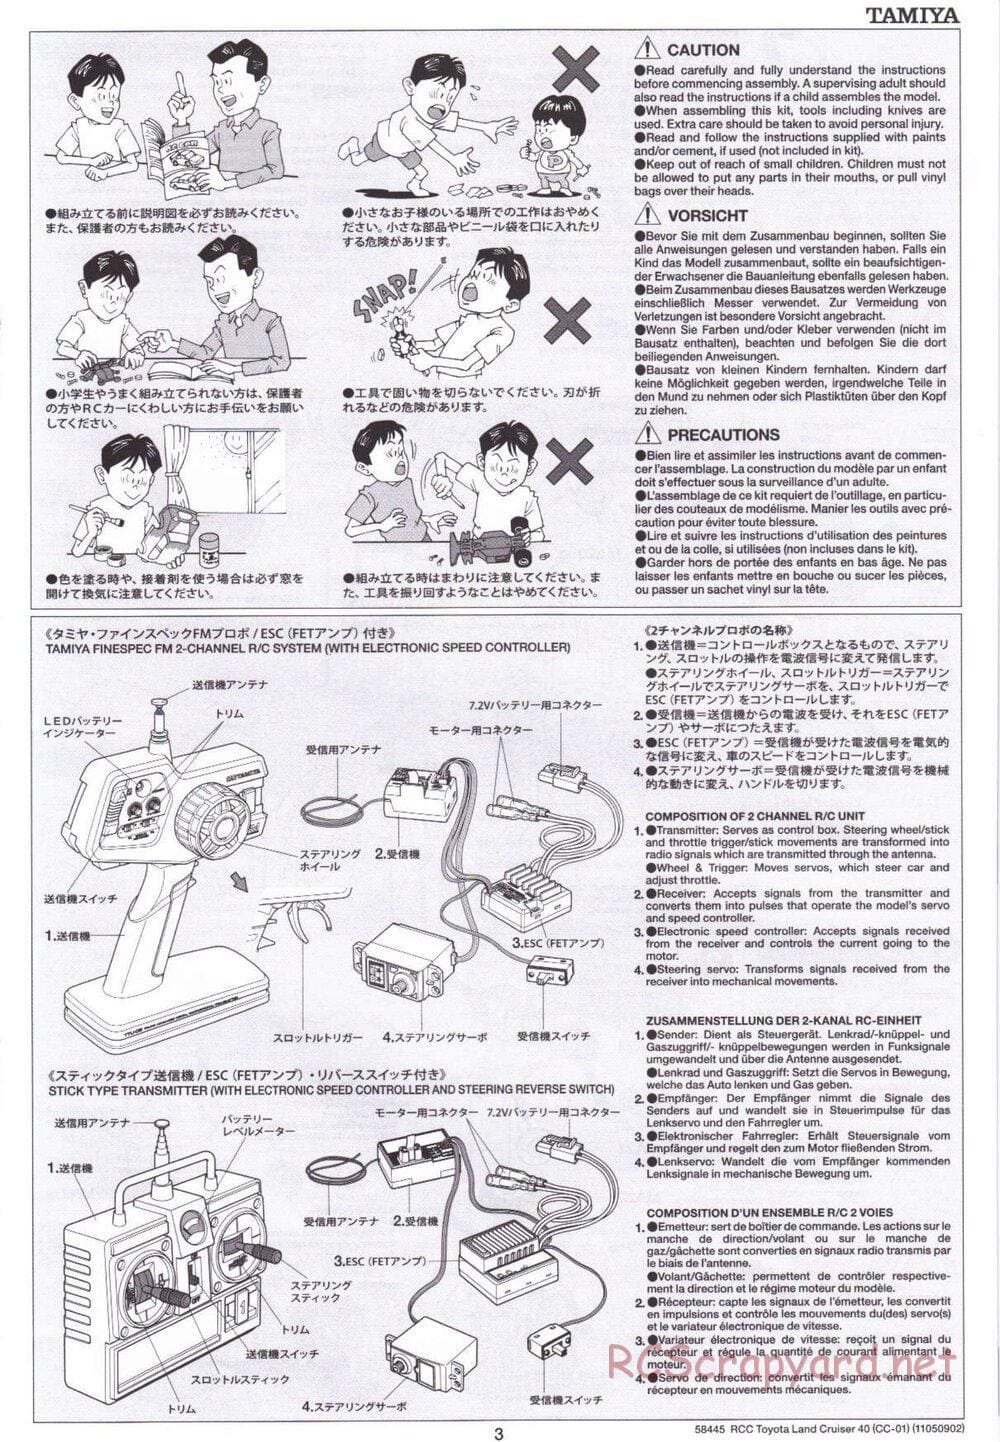 Tamiya - Toyota Land Cruiser 40 - CC-01 Chassis - Manual - Page 3